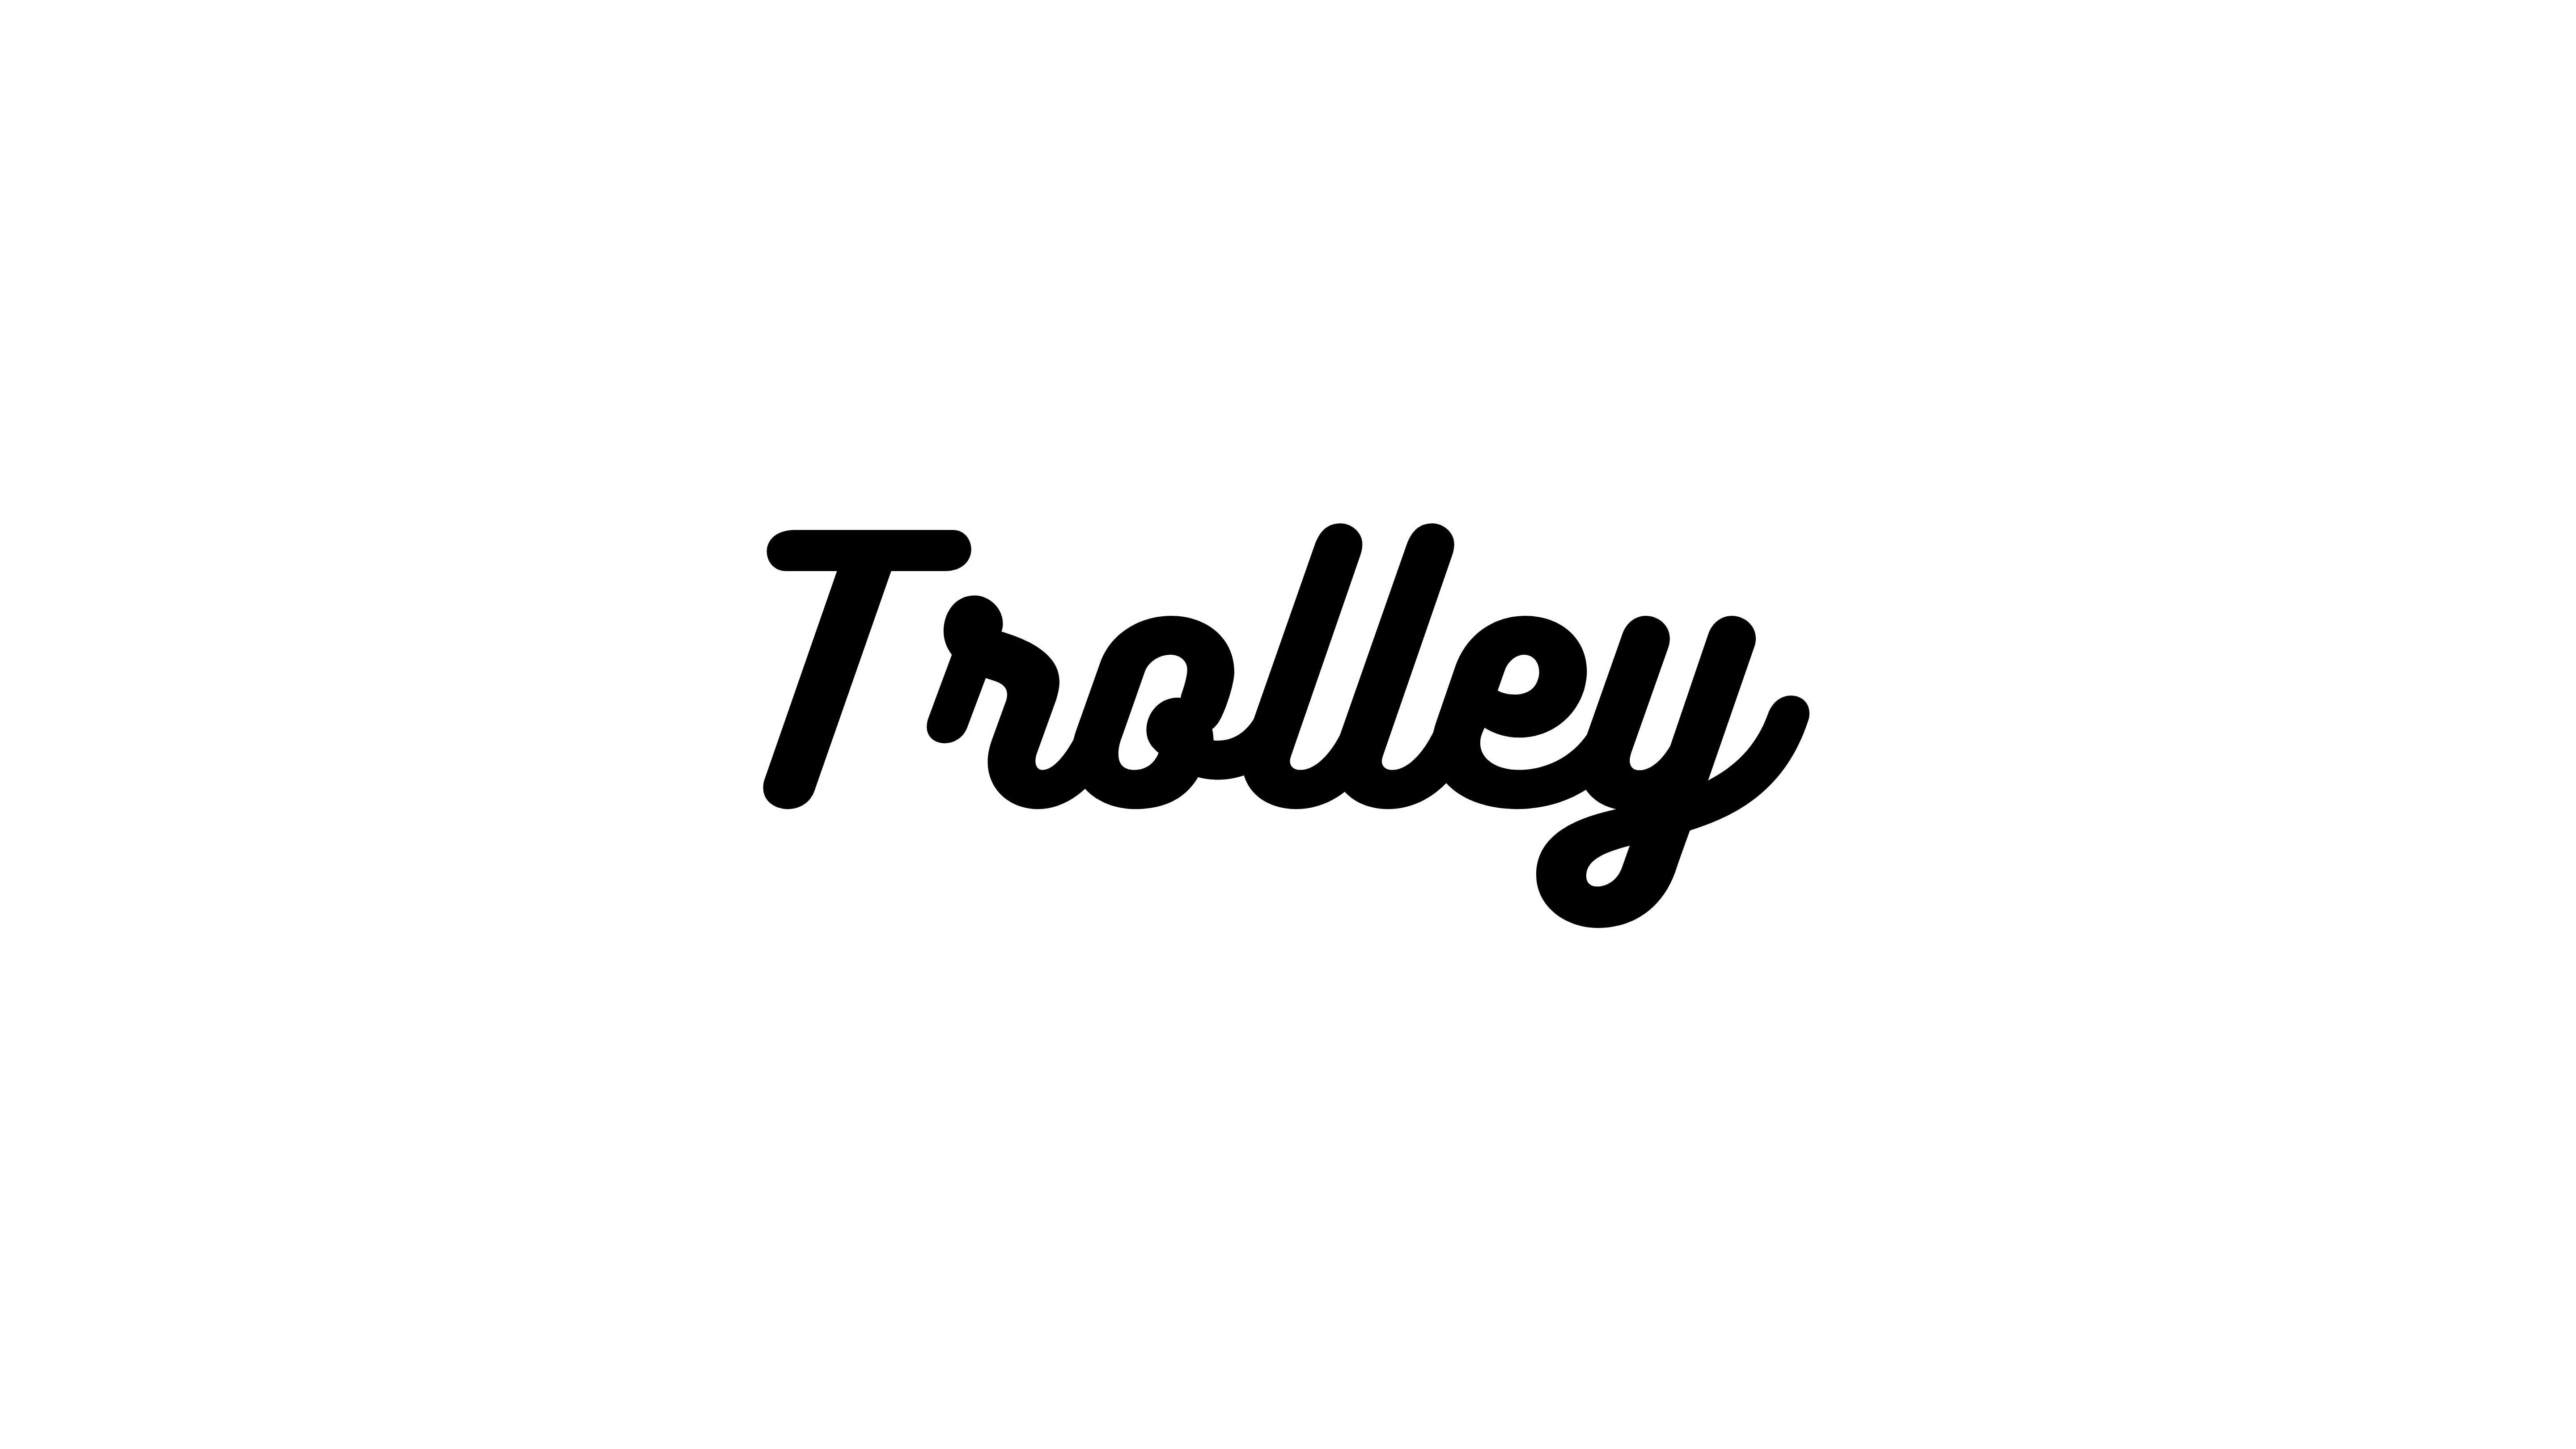 Trademark Logo TROLLEY